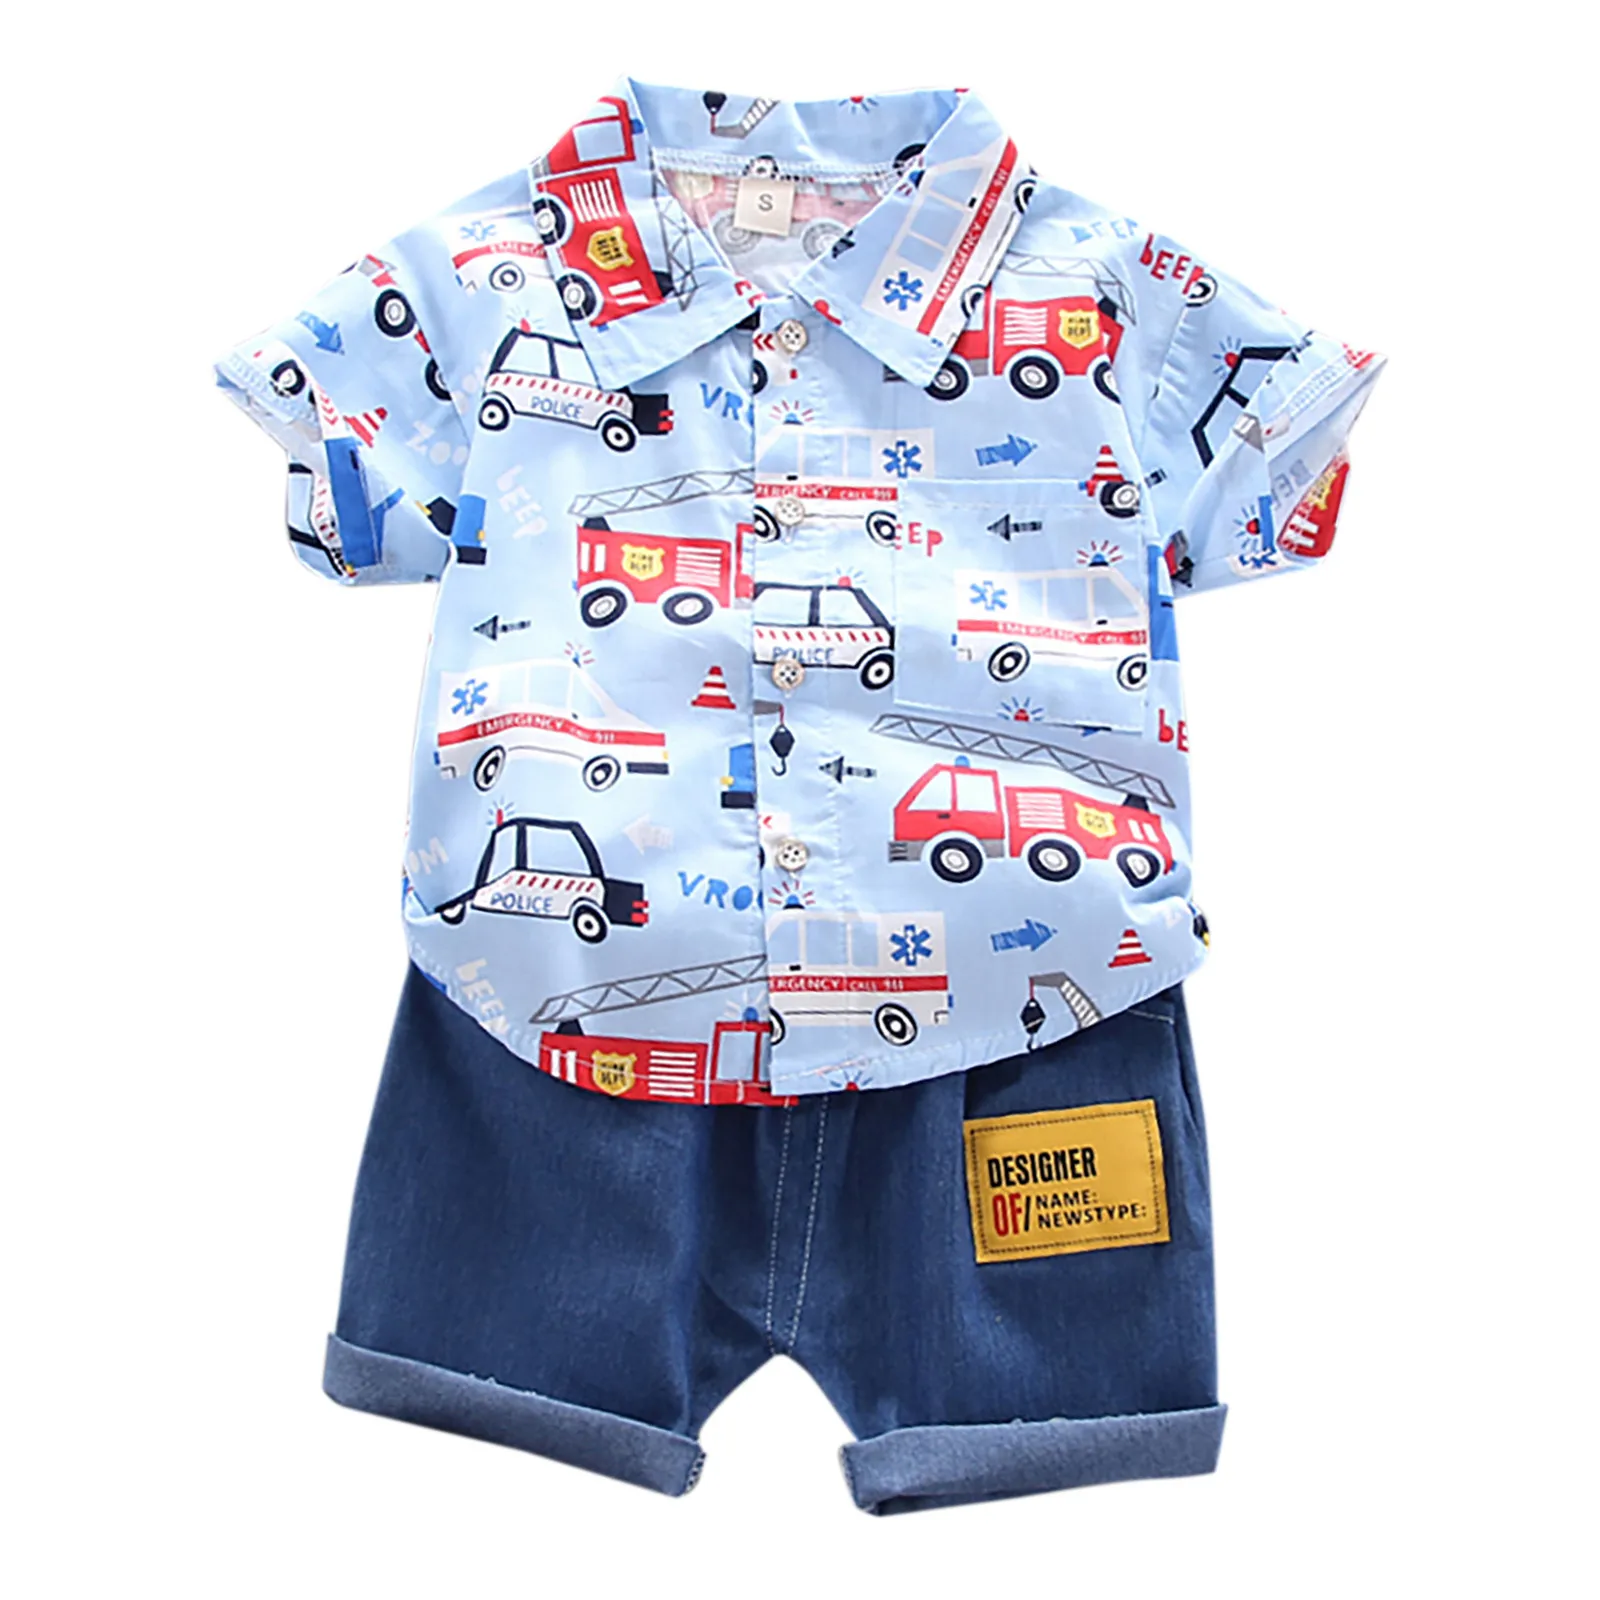 adviicd 4t Designer Clothes Baby Set Shirt Shorts Kids Gentleman